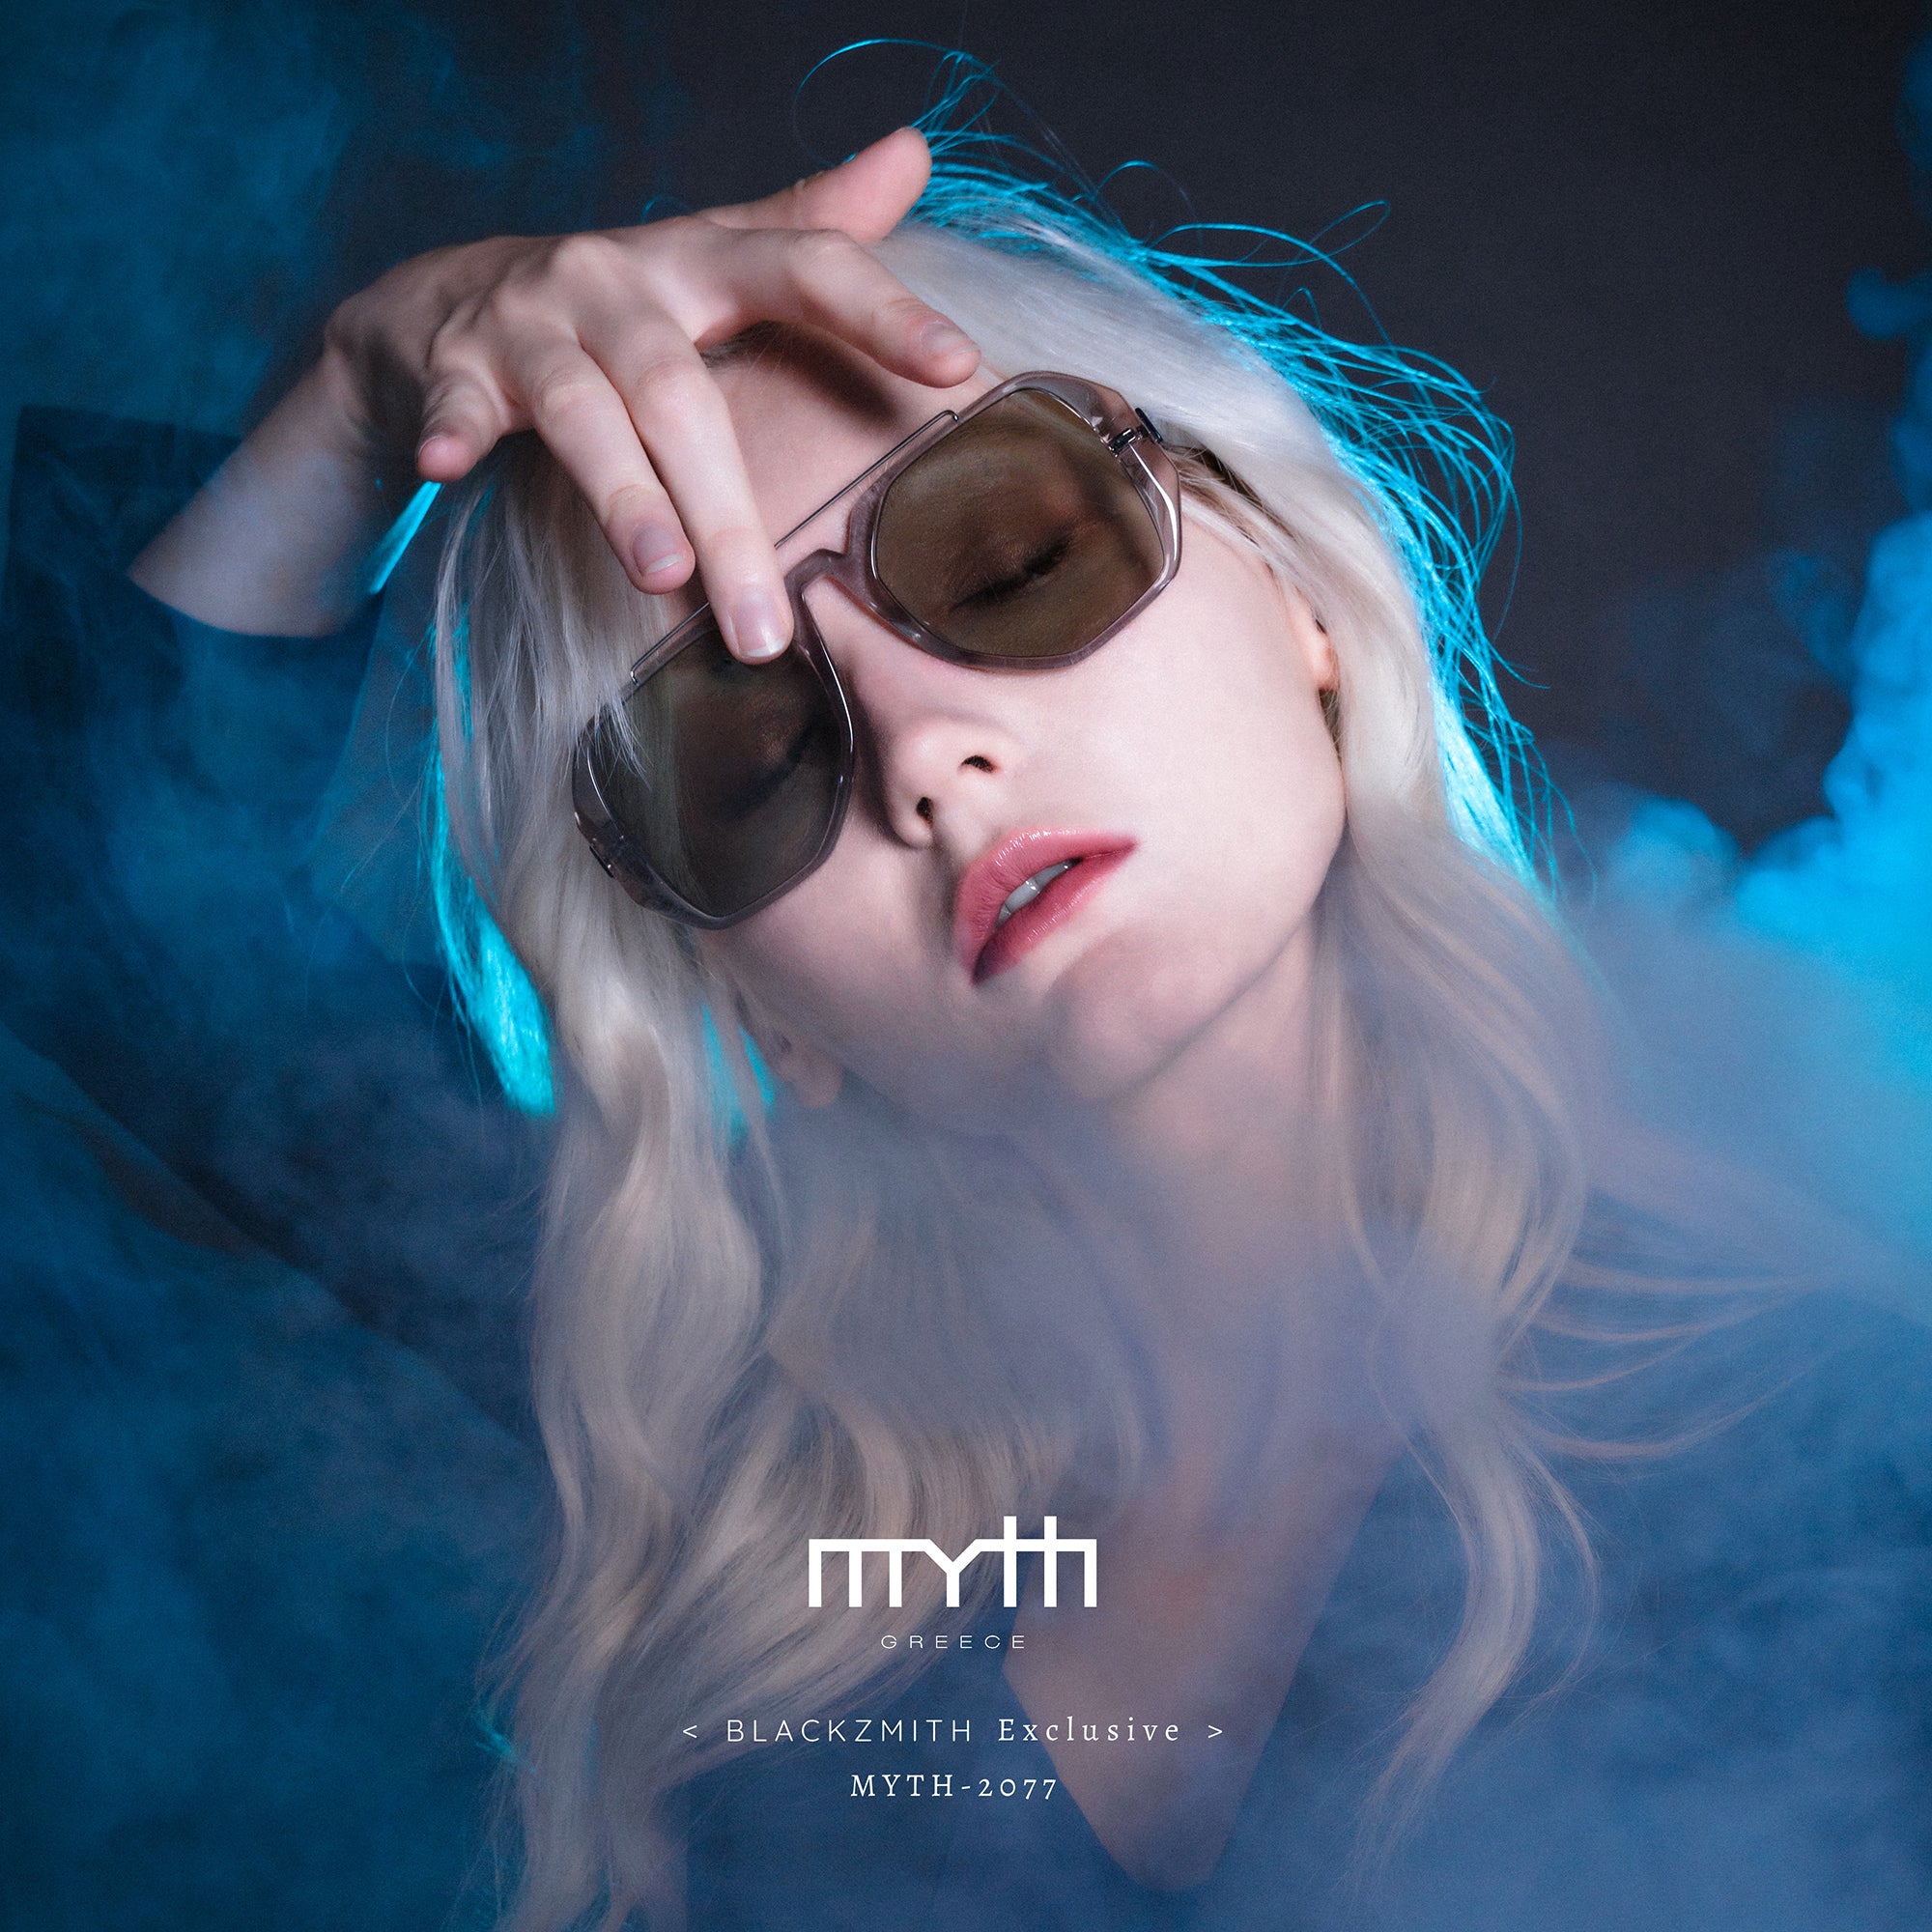 MYTH - MS2112 2077 C3【New】